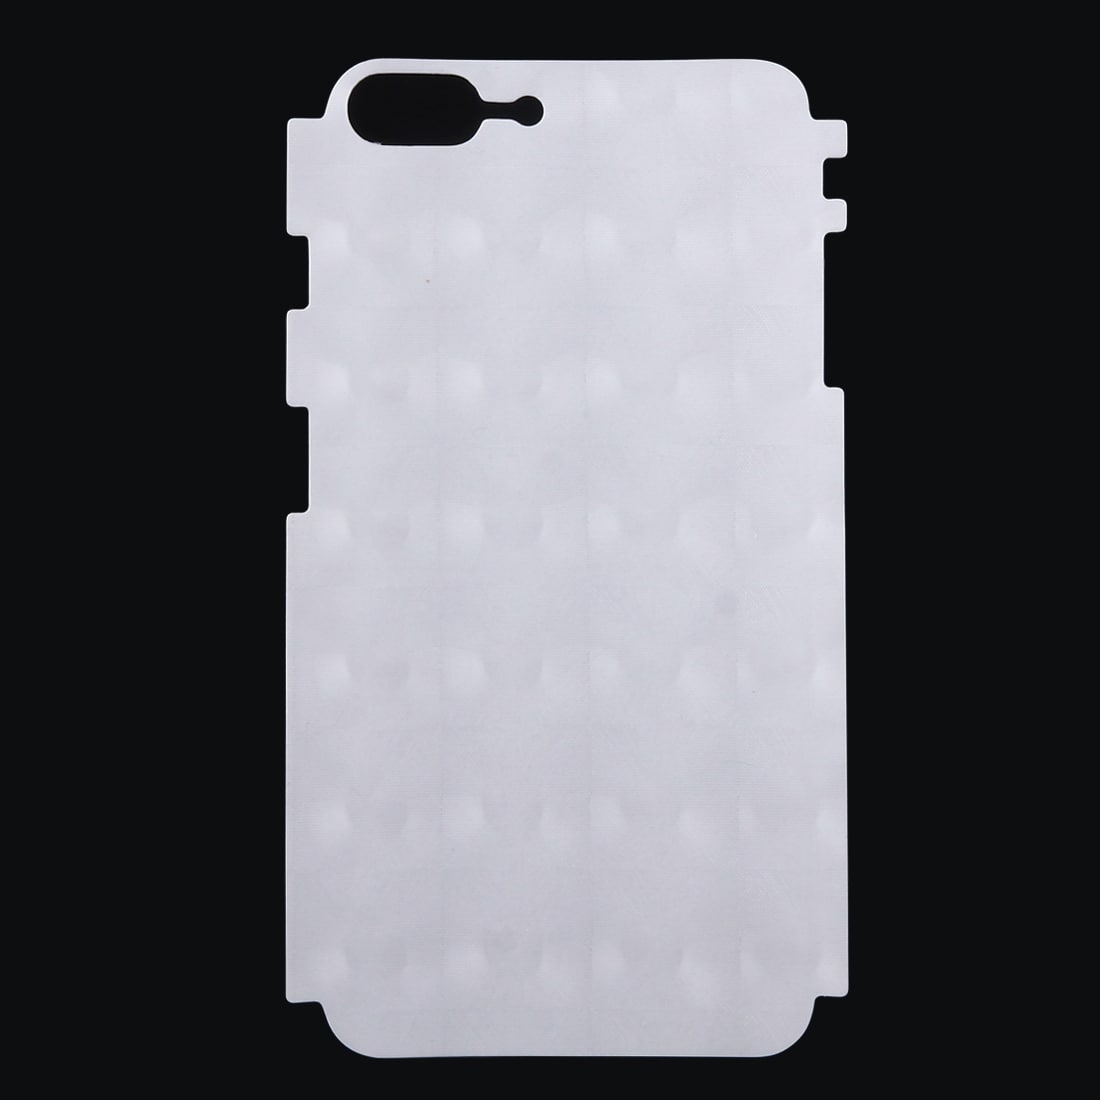 Skin Sticker iPhone 7 Plus - beskyttelsesfilm i 3D til baksiden